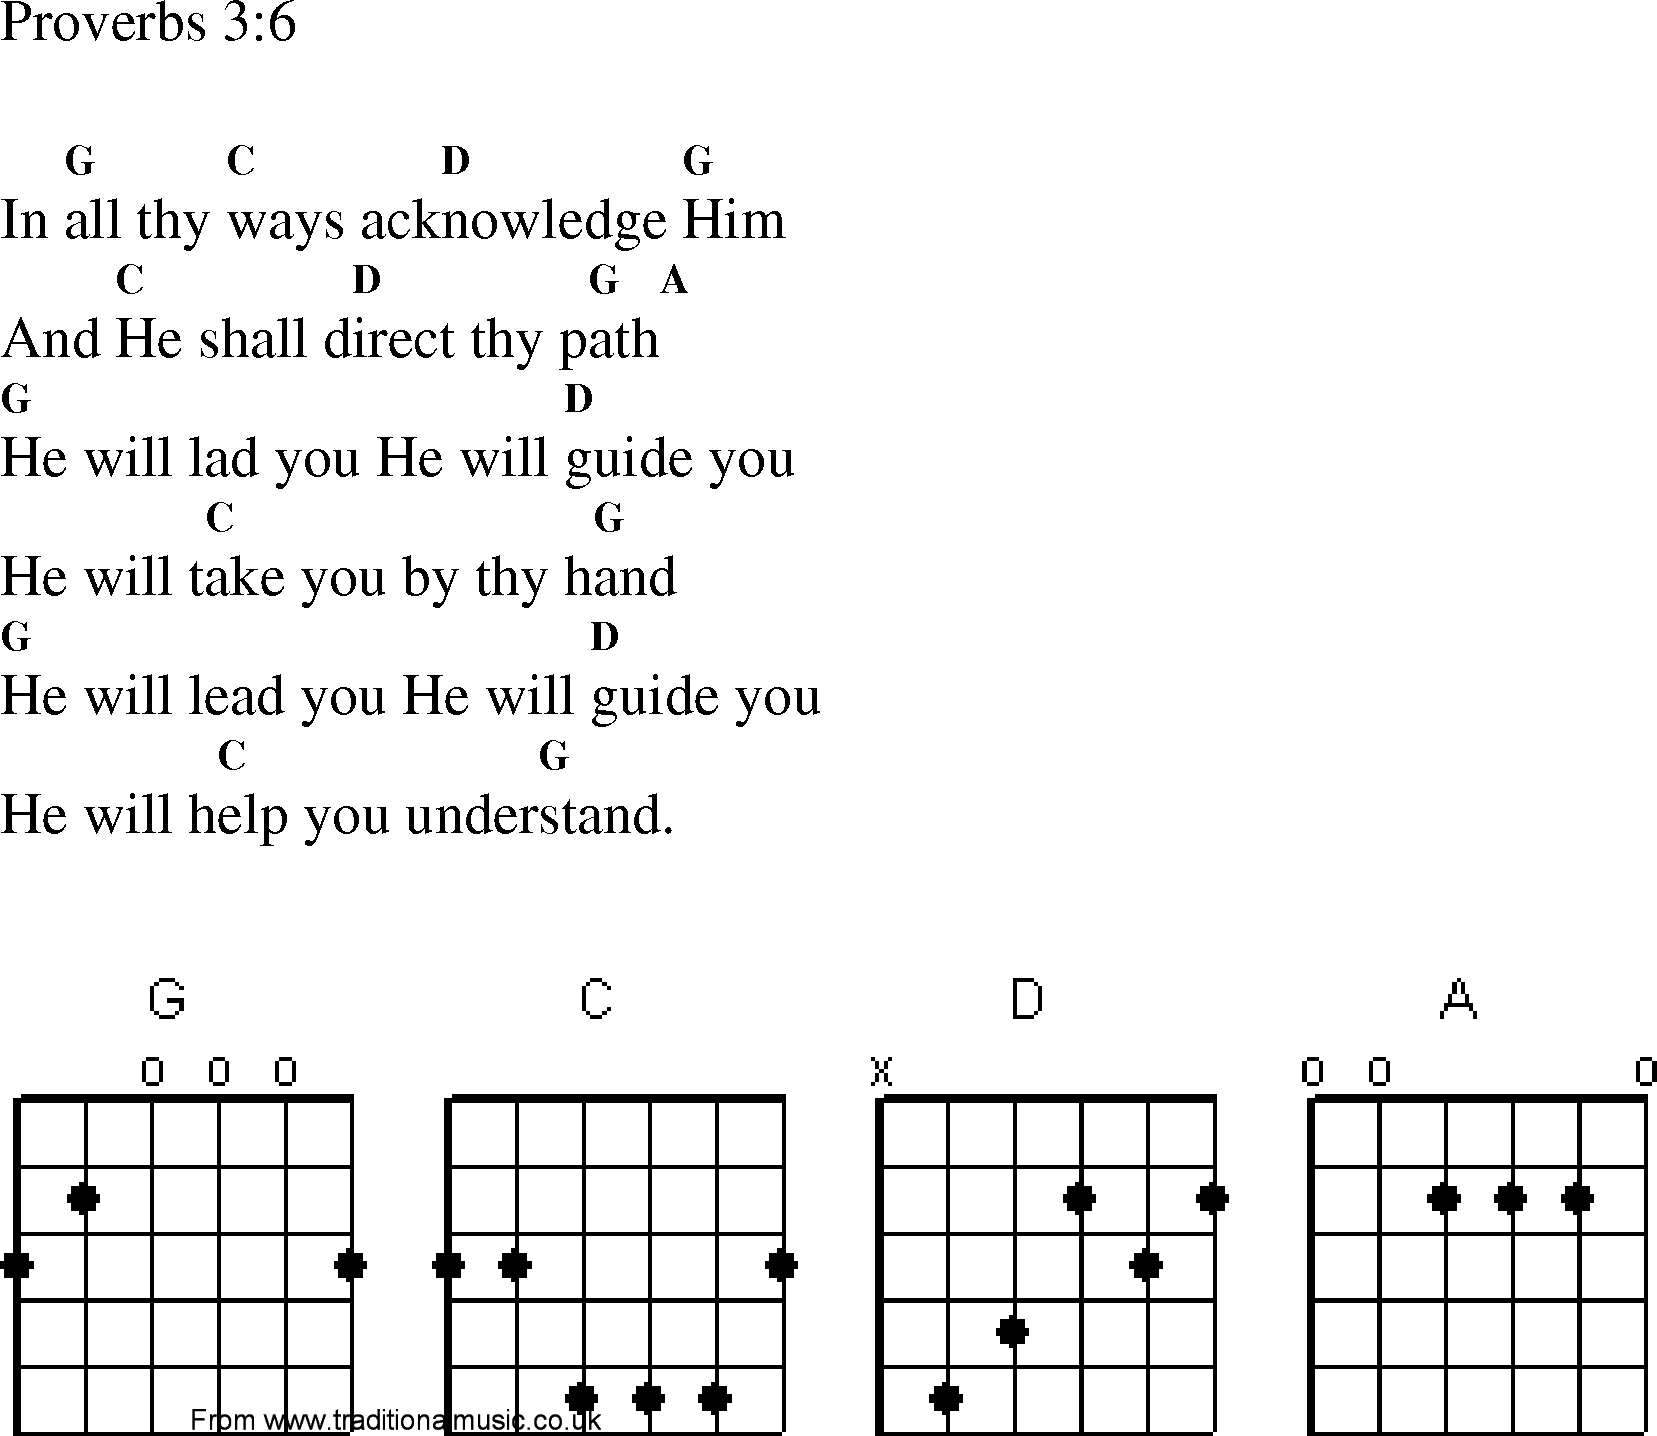 Gospel Song: proverbs_3_6, lyrics and chords.